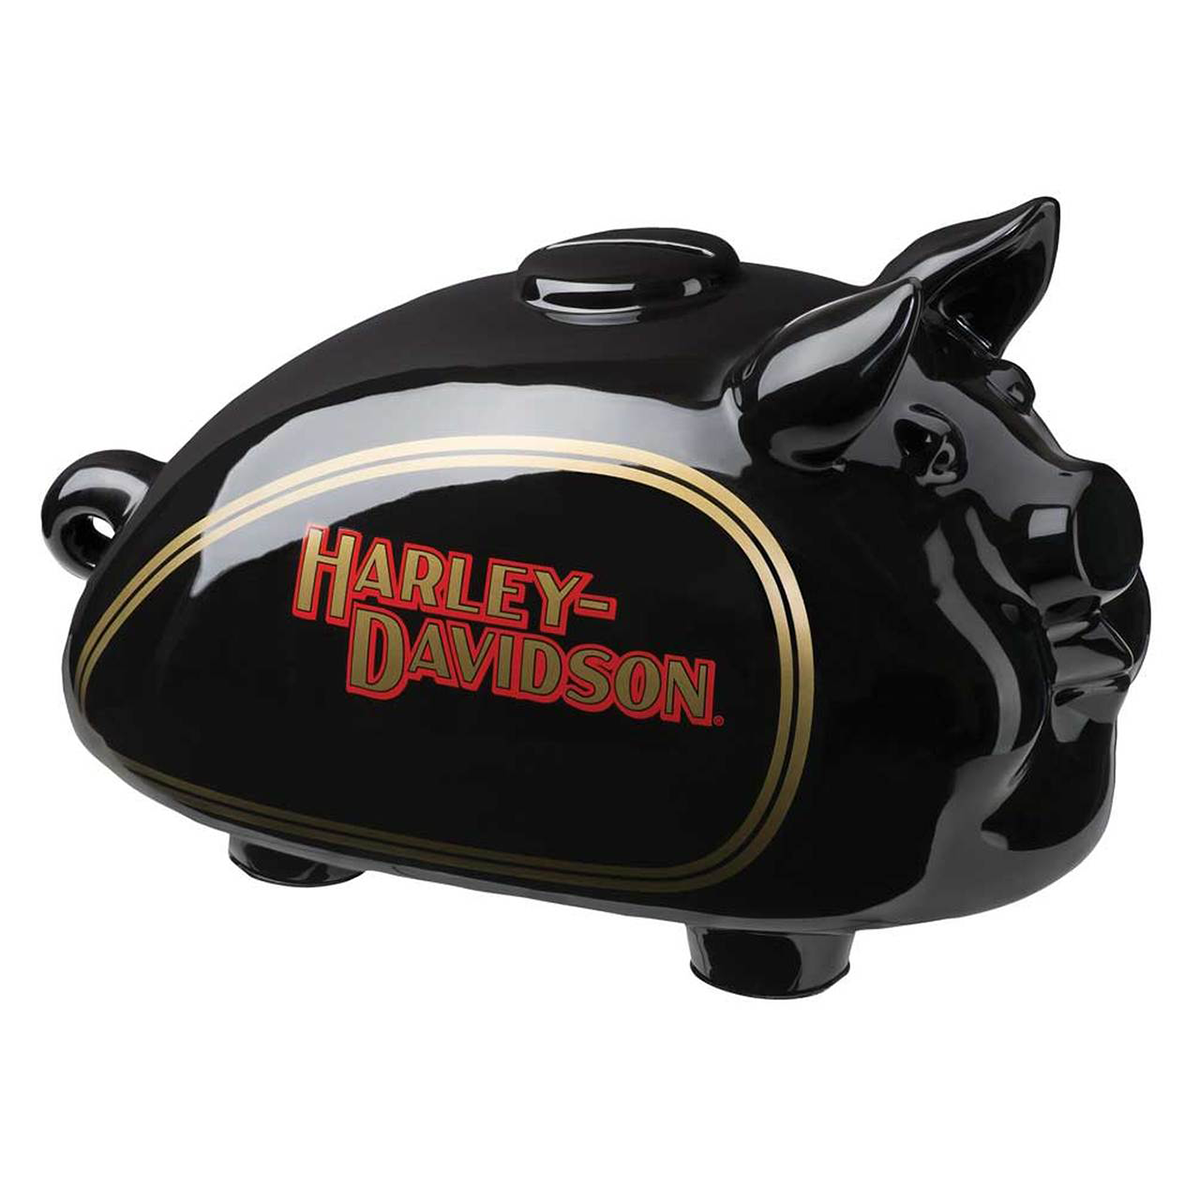 Harley-Davidson Classic Tank Hog Bank